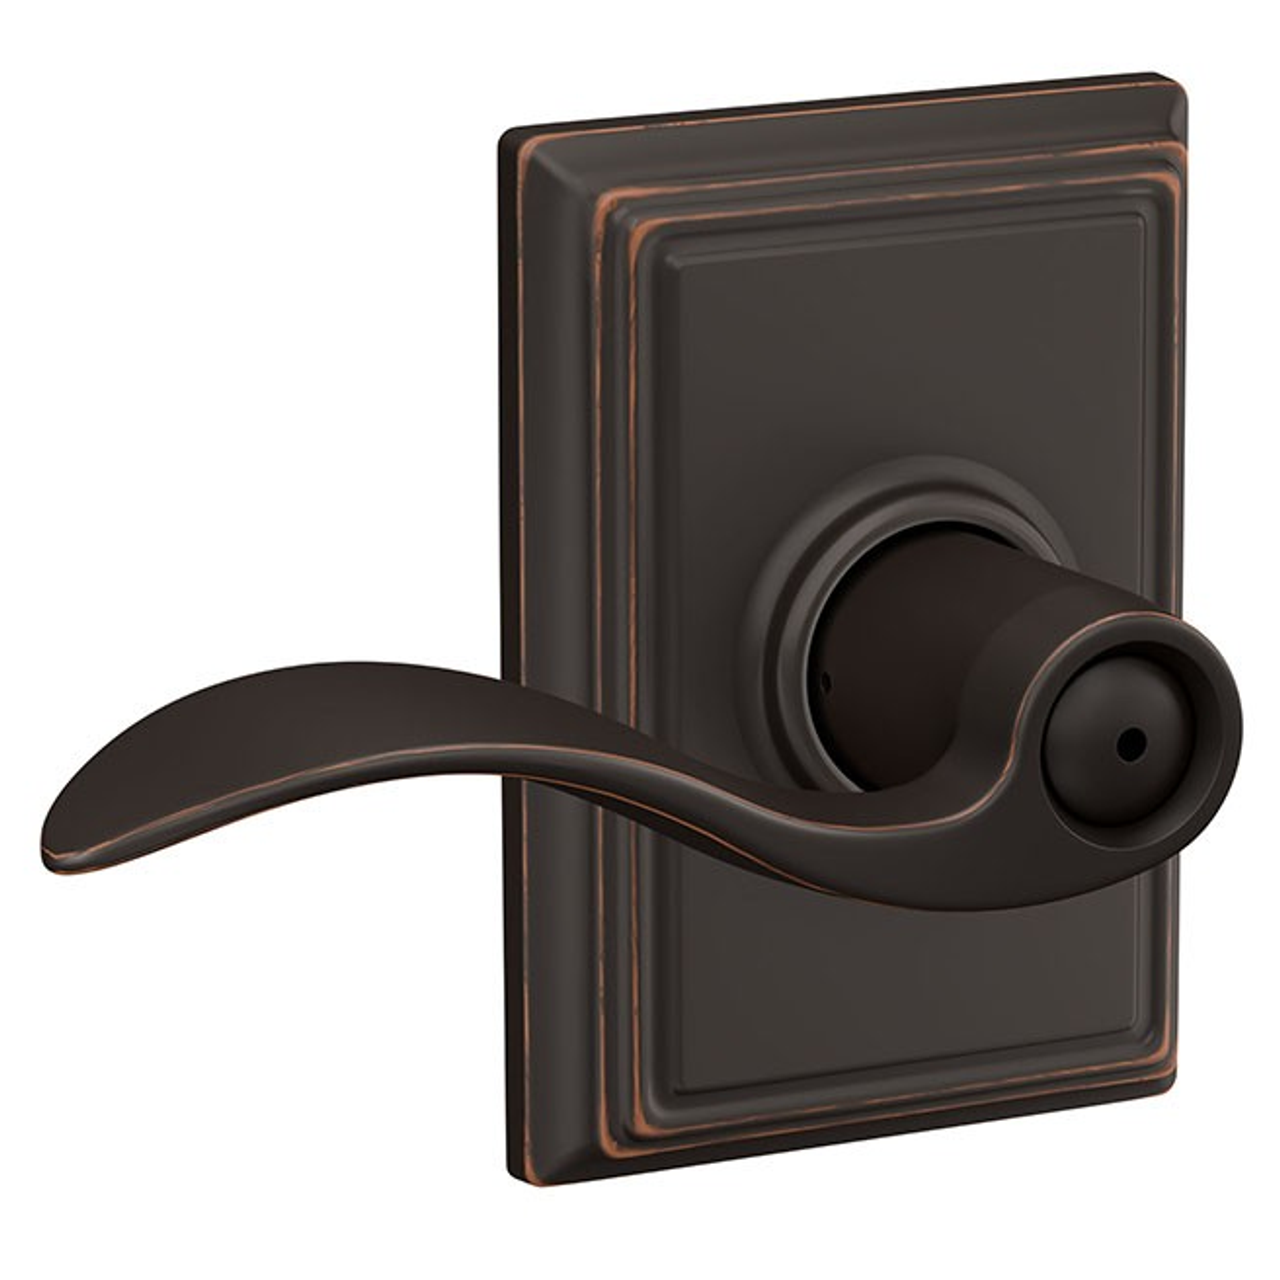 Schlage Privacy Accent Lever Door Lock with Addison Trim